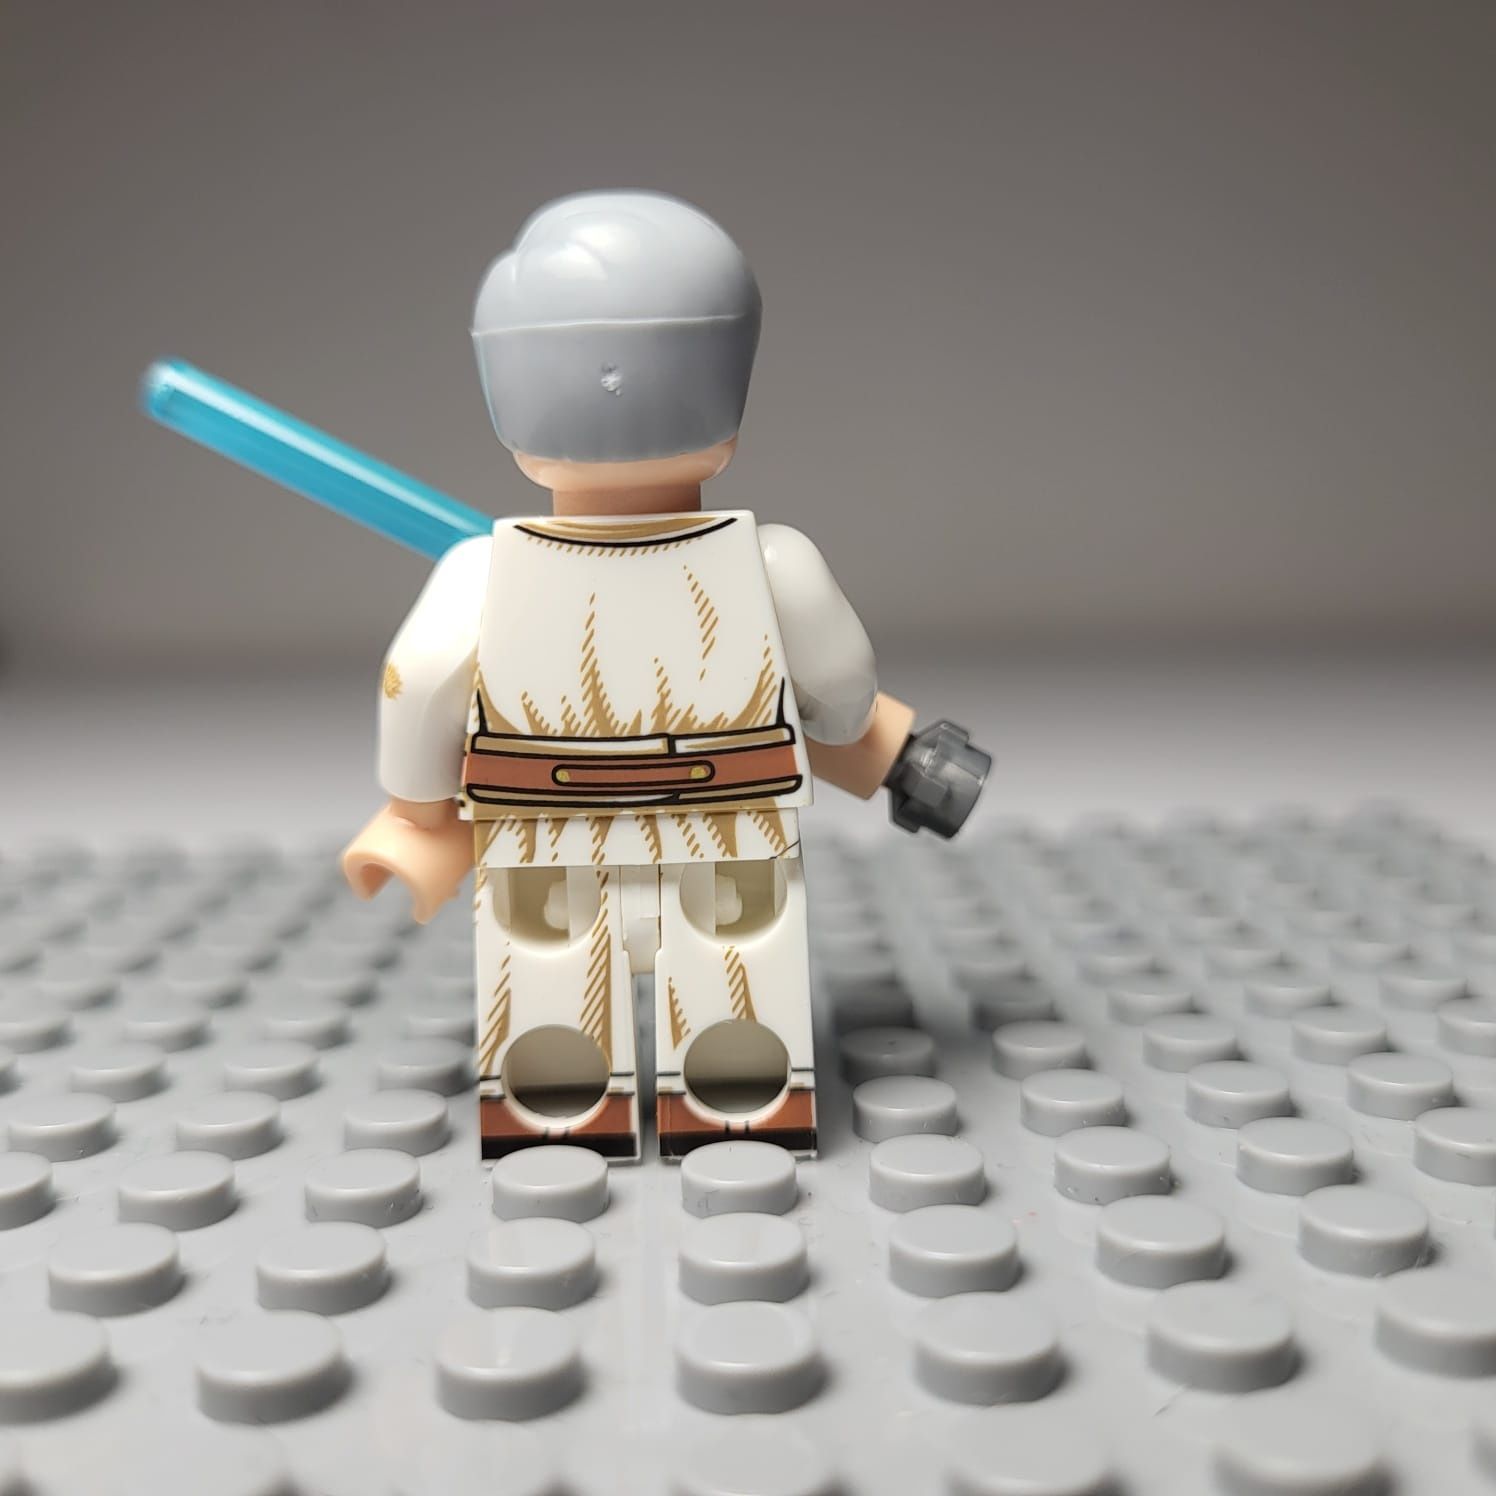 Obi Wan Kenobi | Star Wars | Gratis Naklejka Lego